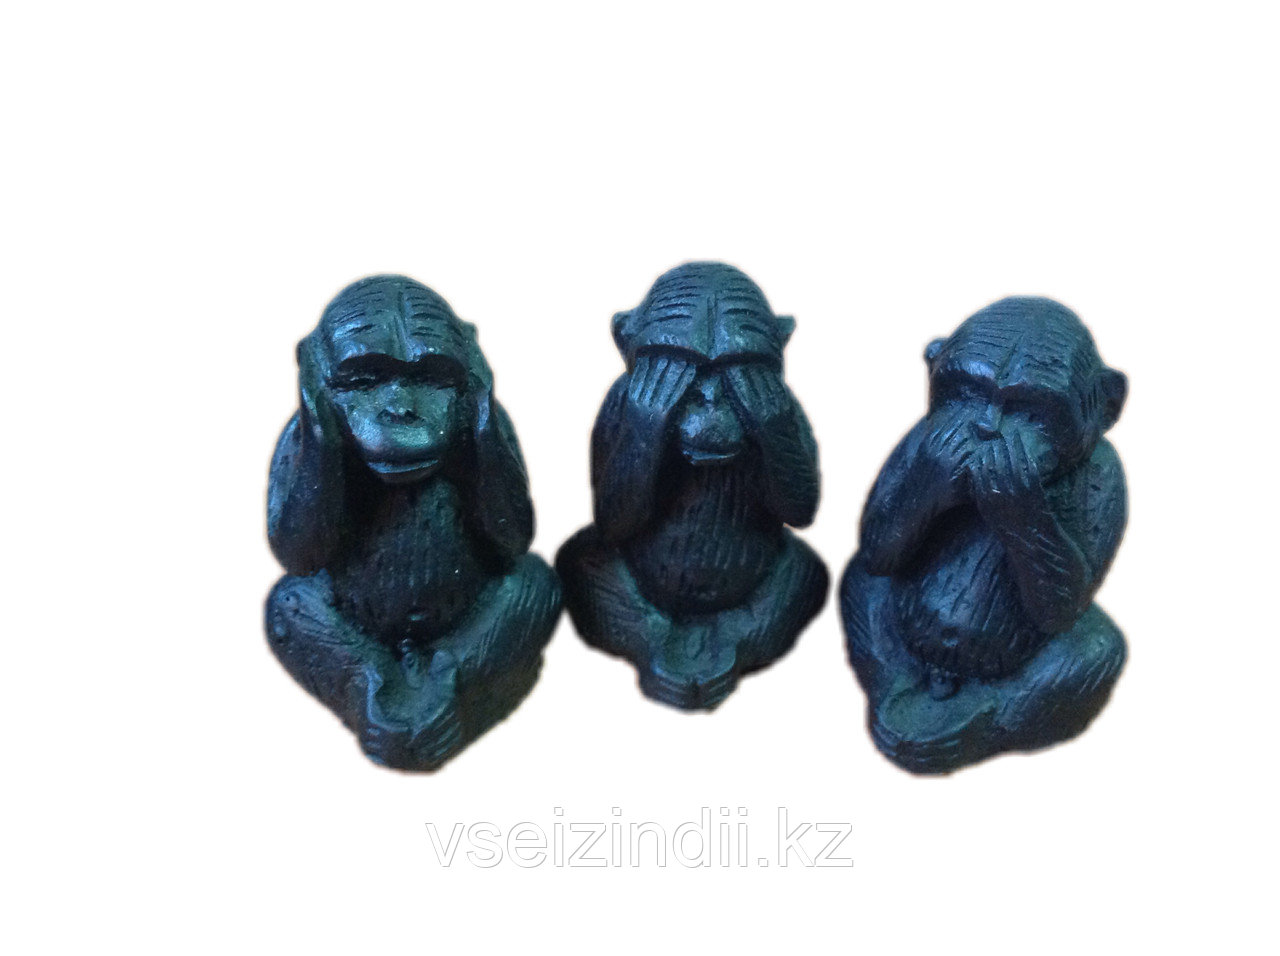 Статуэтка "Три обезьяны"